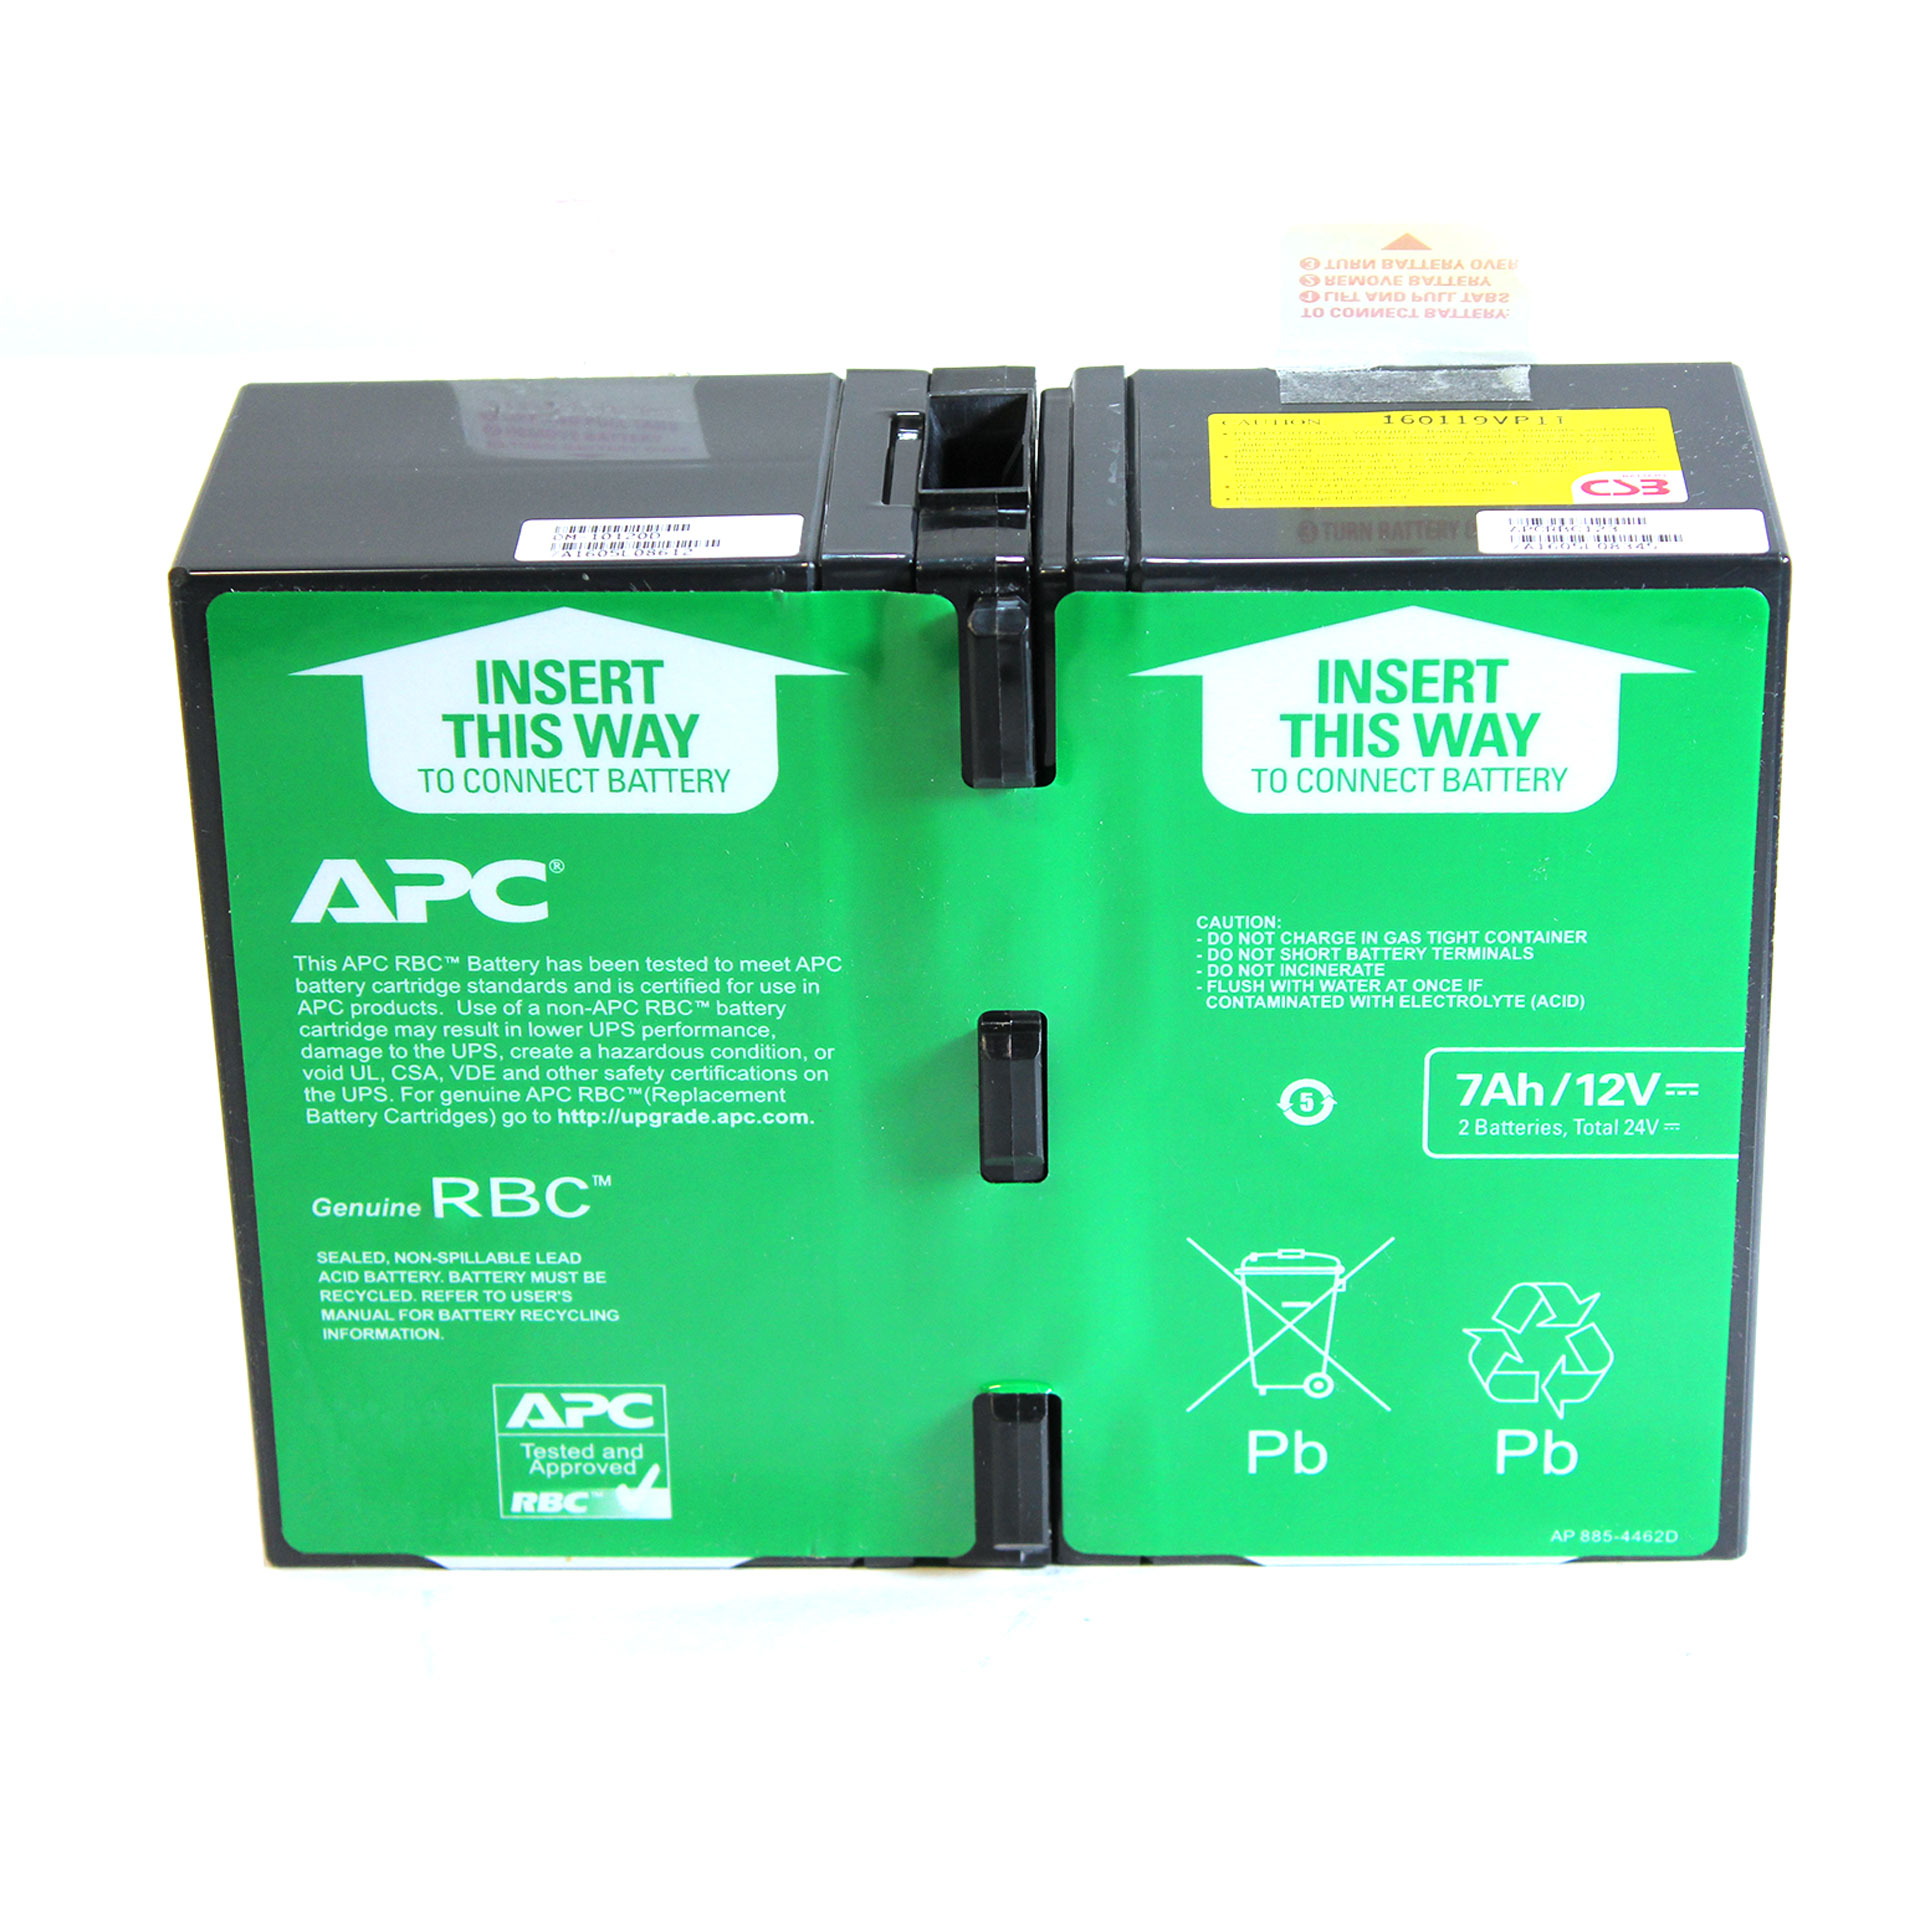 Apc Replacement Battery Cartridge 110 India / Apc ups replacement ...